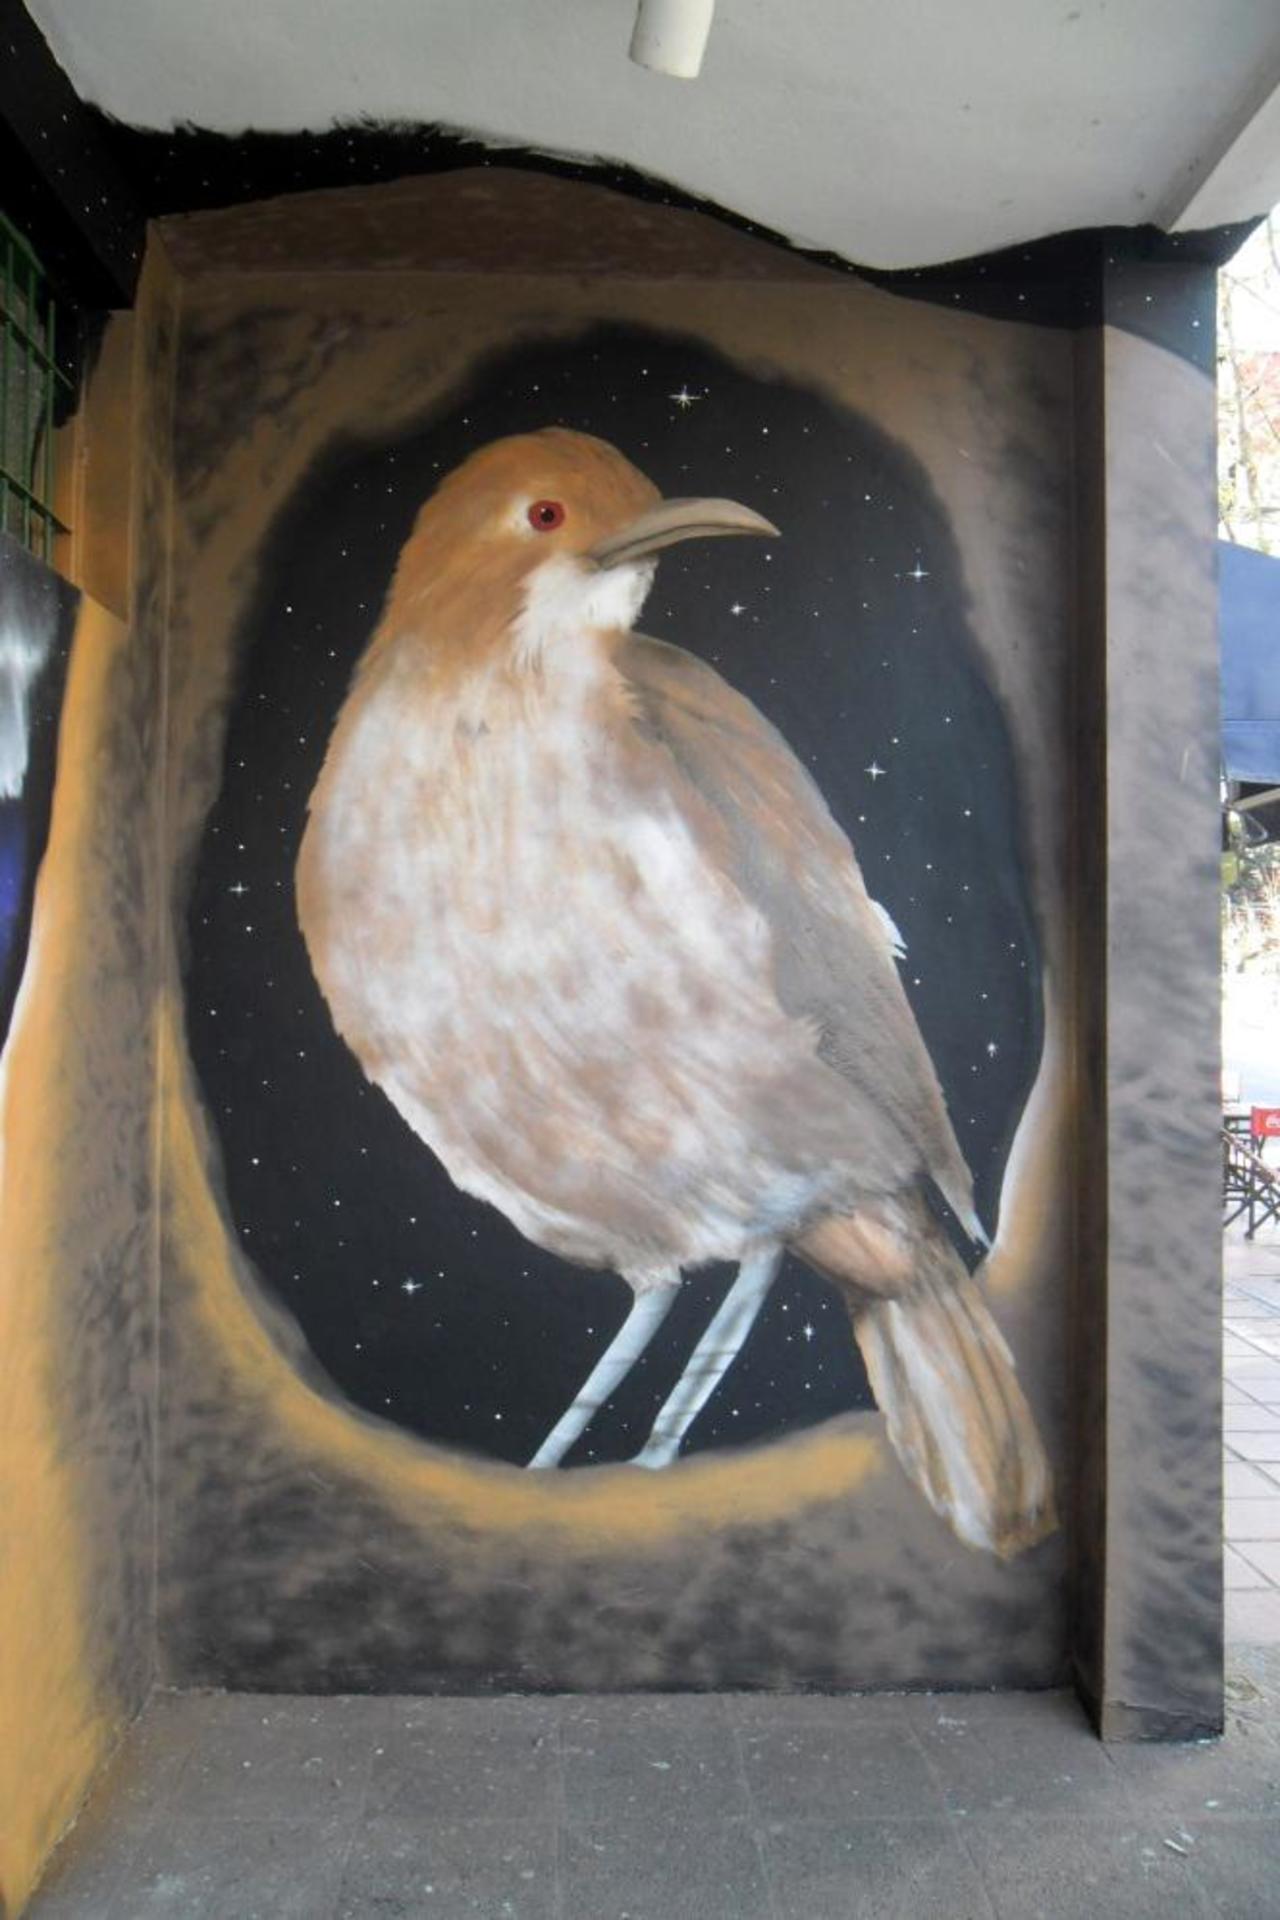 RT @Johnny_Aza5: Hornero #streetart #graffiti #bird
en #Neuquén
@lapizgigante @VisualAgenda @Alternopolis @S_Al_Shaheen @streetartnews http://t.co/ICcDVv4esW